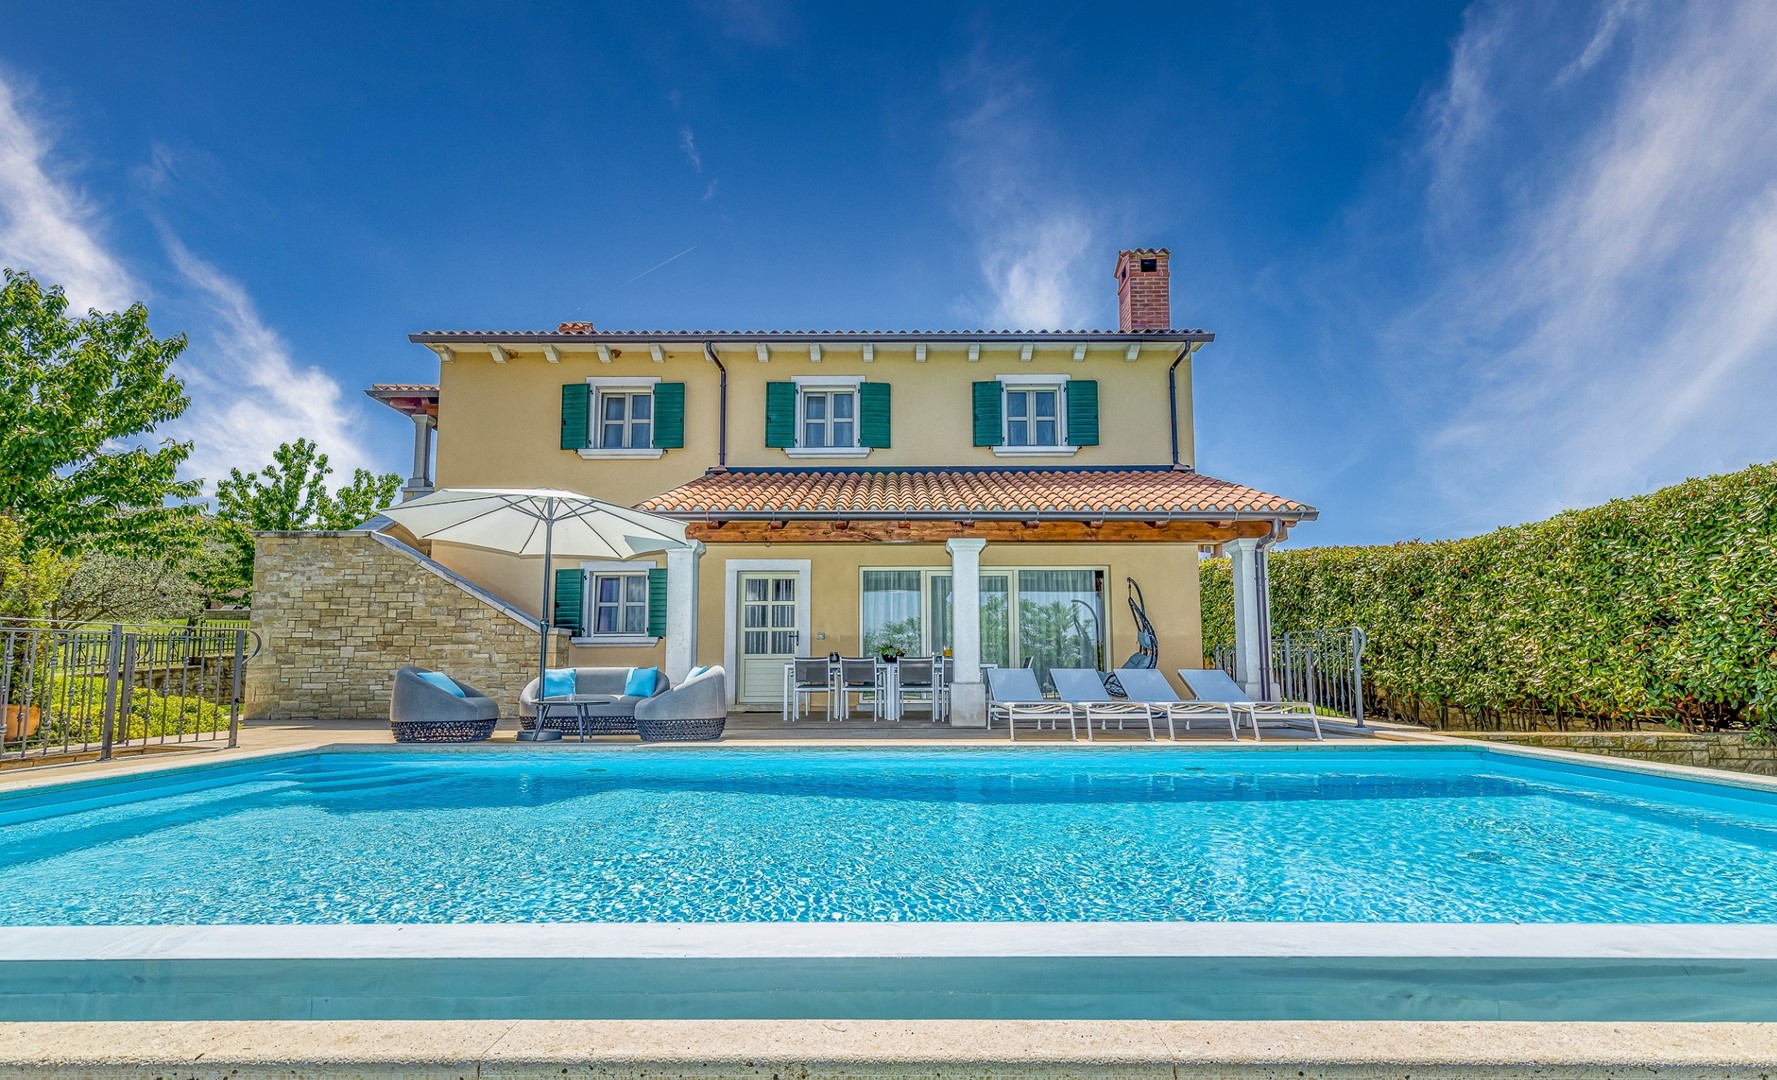 Familienfreundliche Villa Sana mit privatem Pool